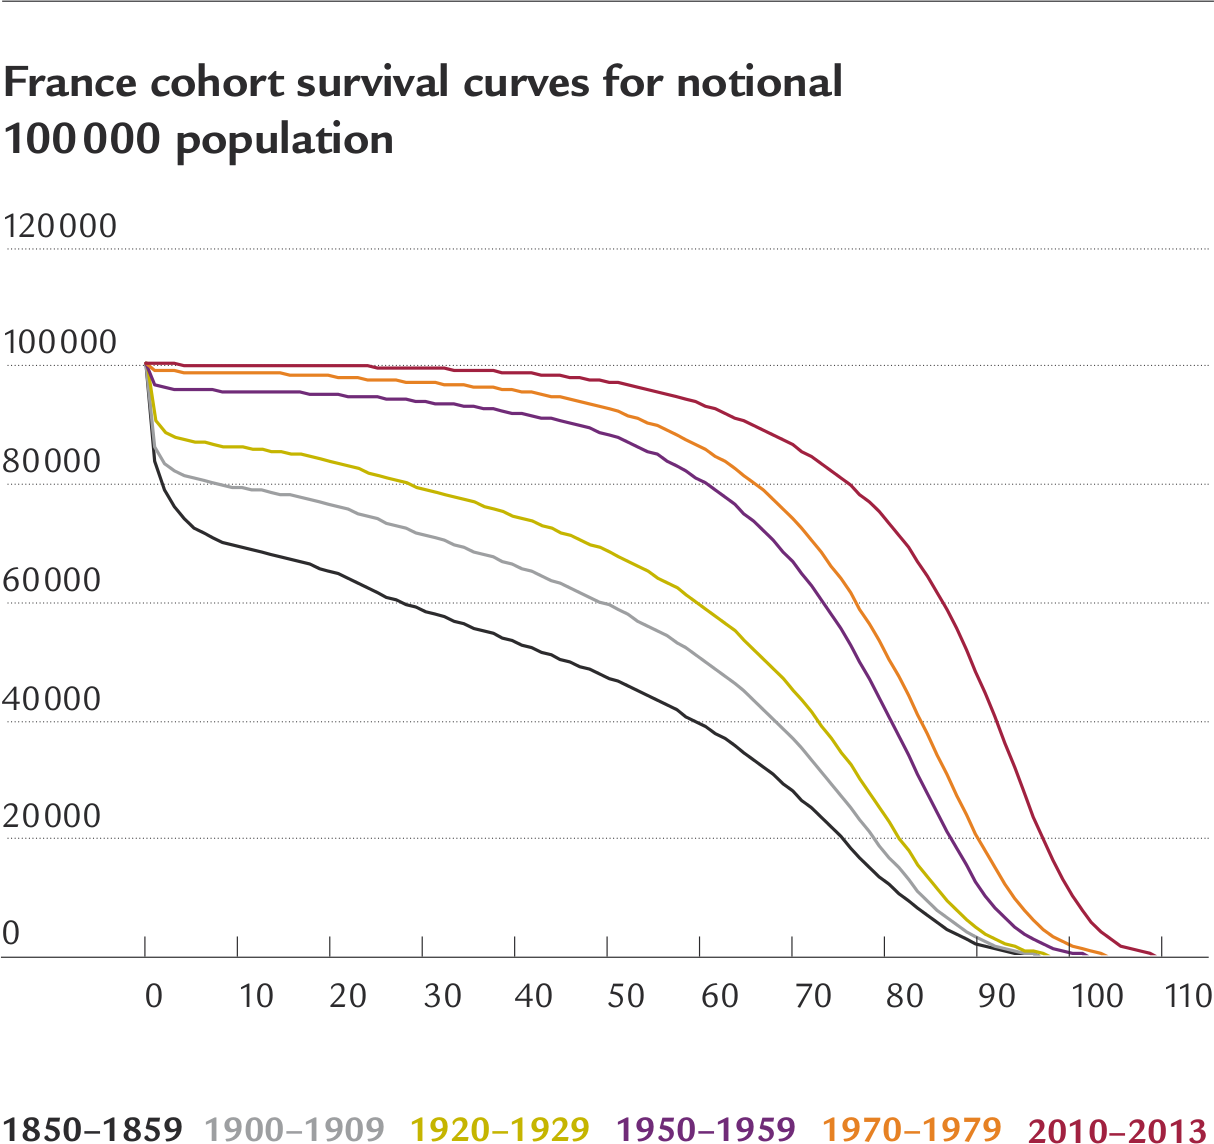 Chart: France cohort survival curves for notional 100'000 population